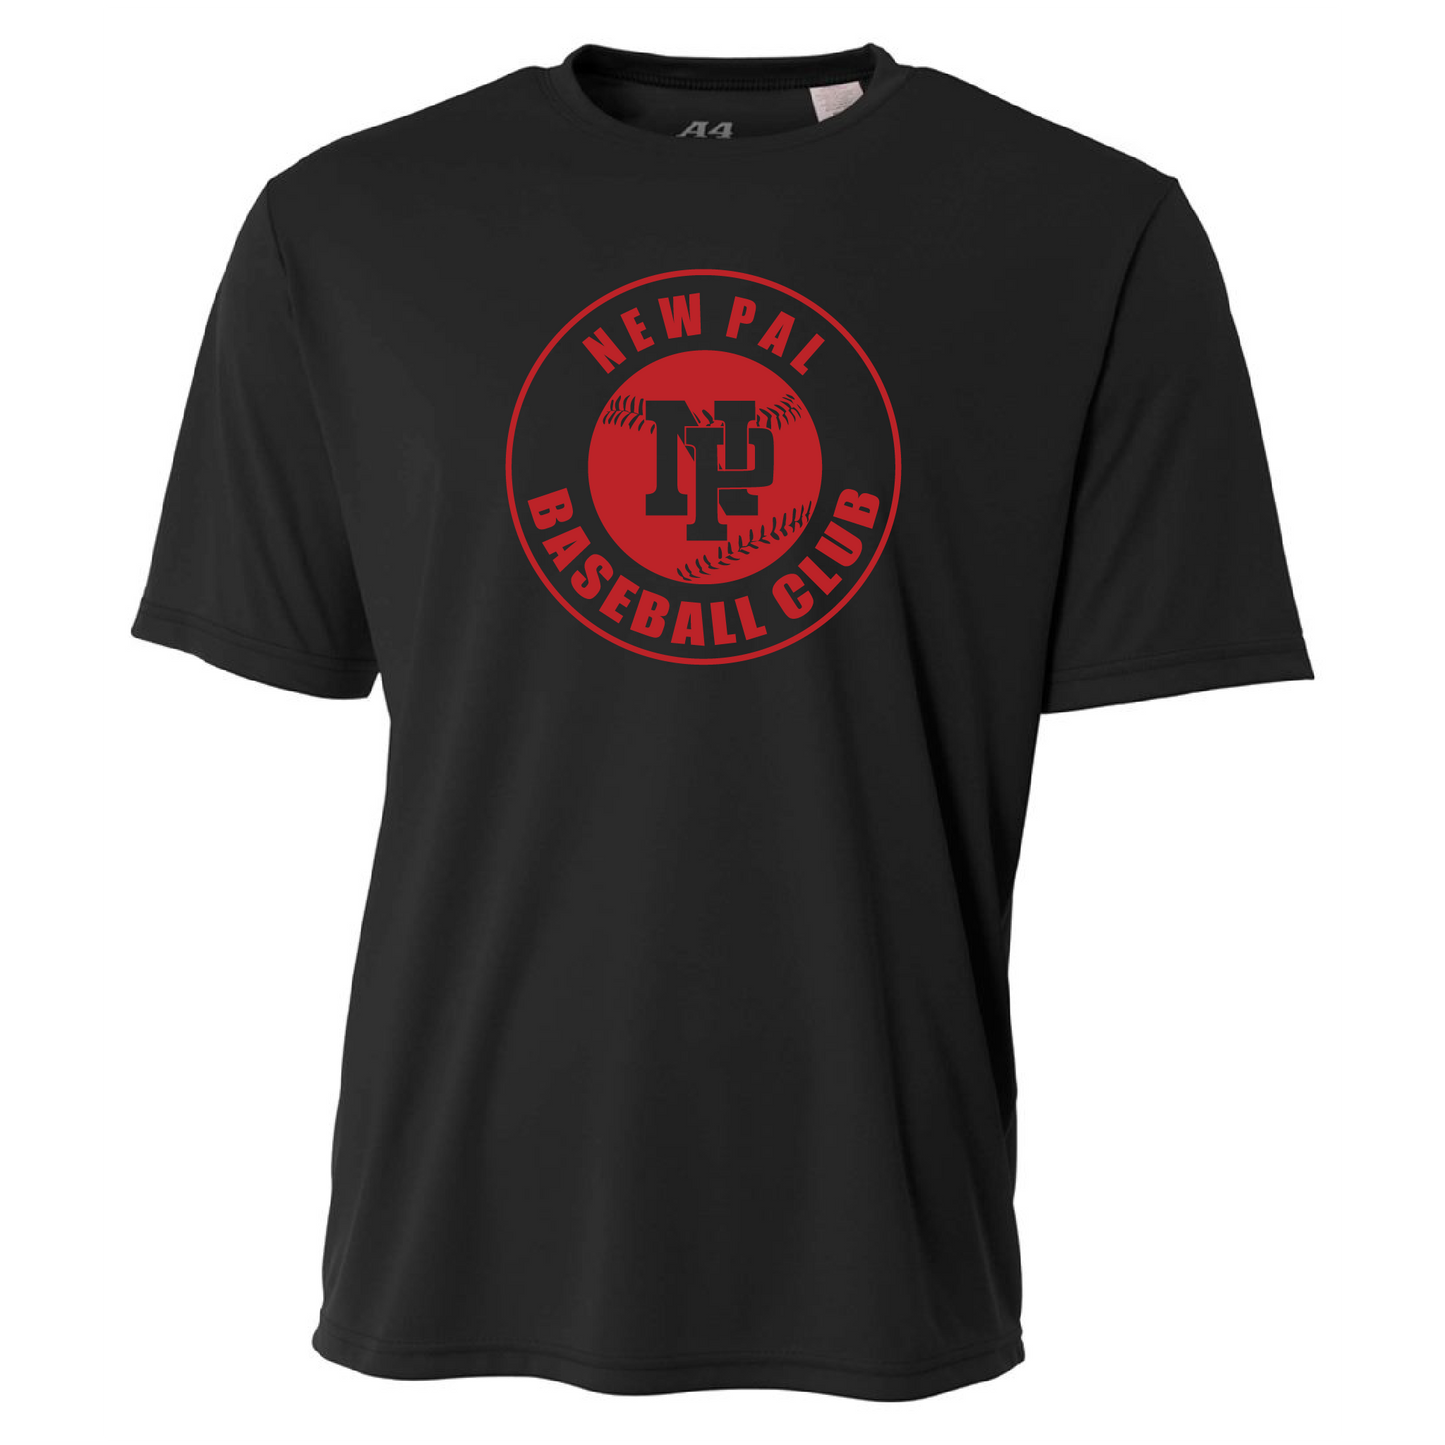 Mens/Youth Short Sleeve T-Shirt - NP Baseball Club (red logo)